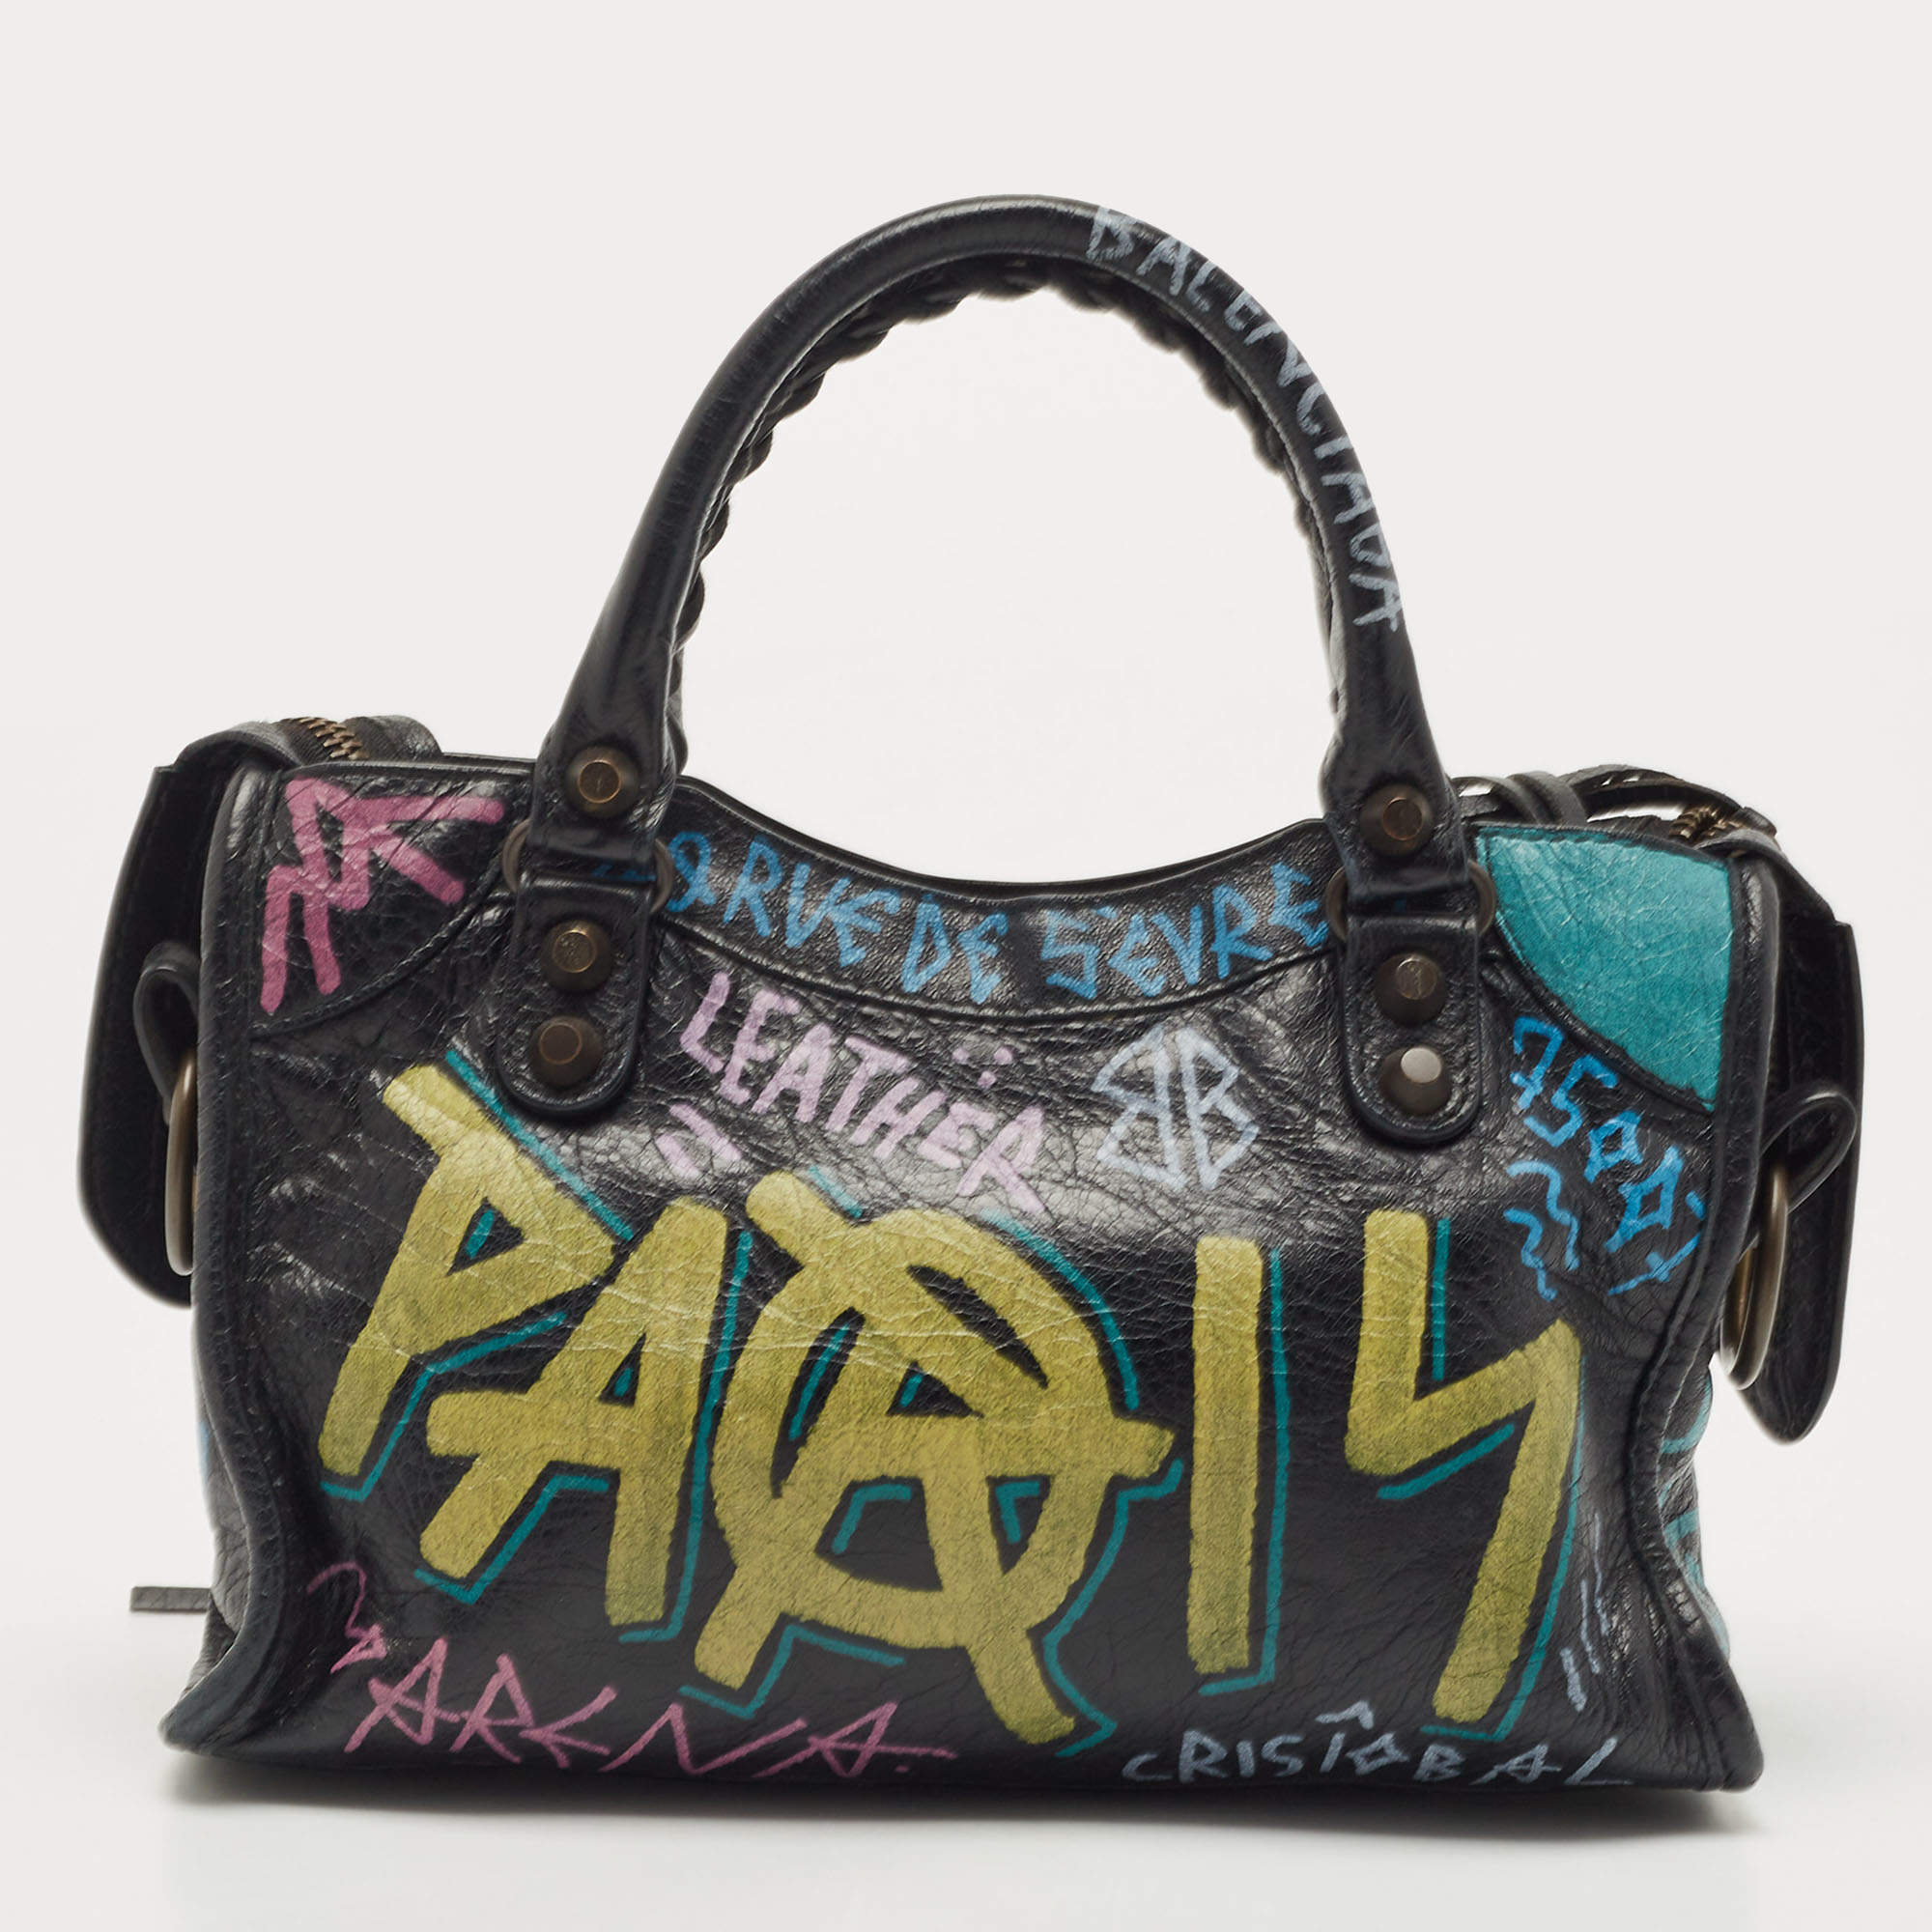 how to graffiti your handbag: balenciaga graffiti city bag DIY